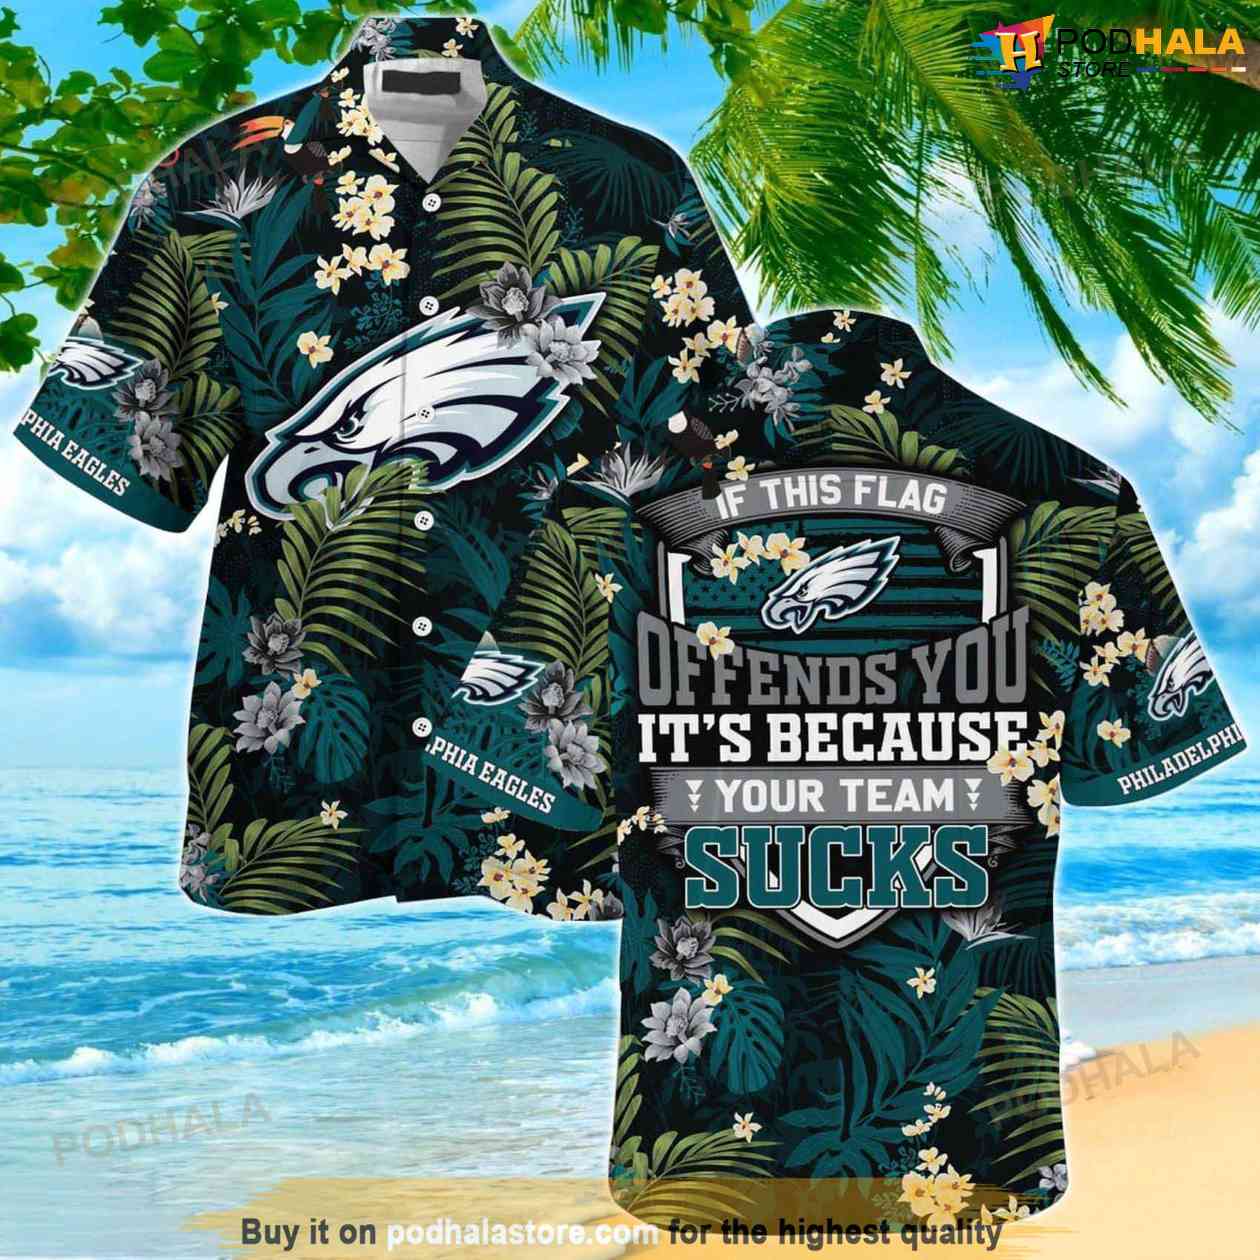 buy eagles jersey